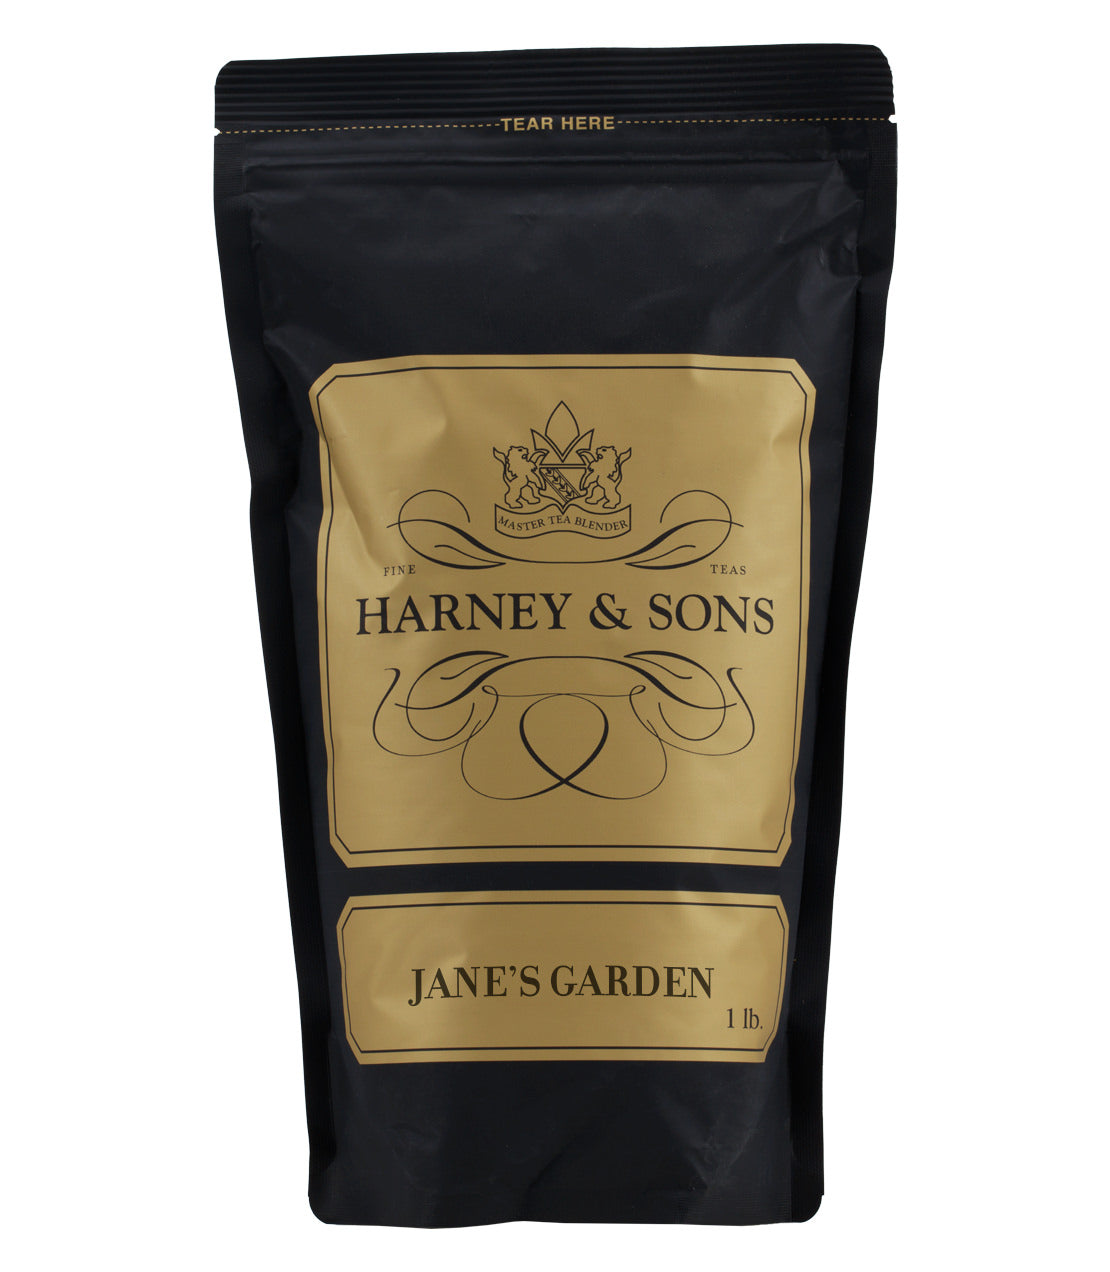 Jane's Garden Tea - Loose 1 lb. Bag - Harney & Sons Fine Teas